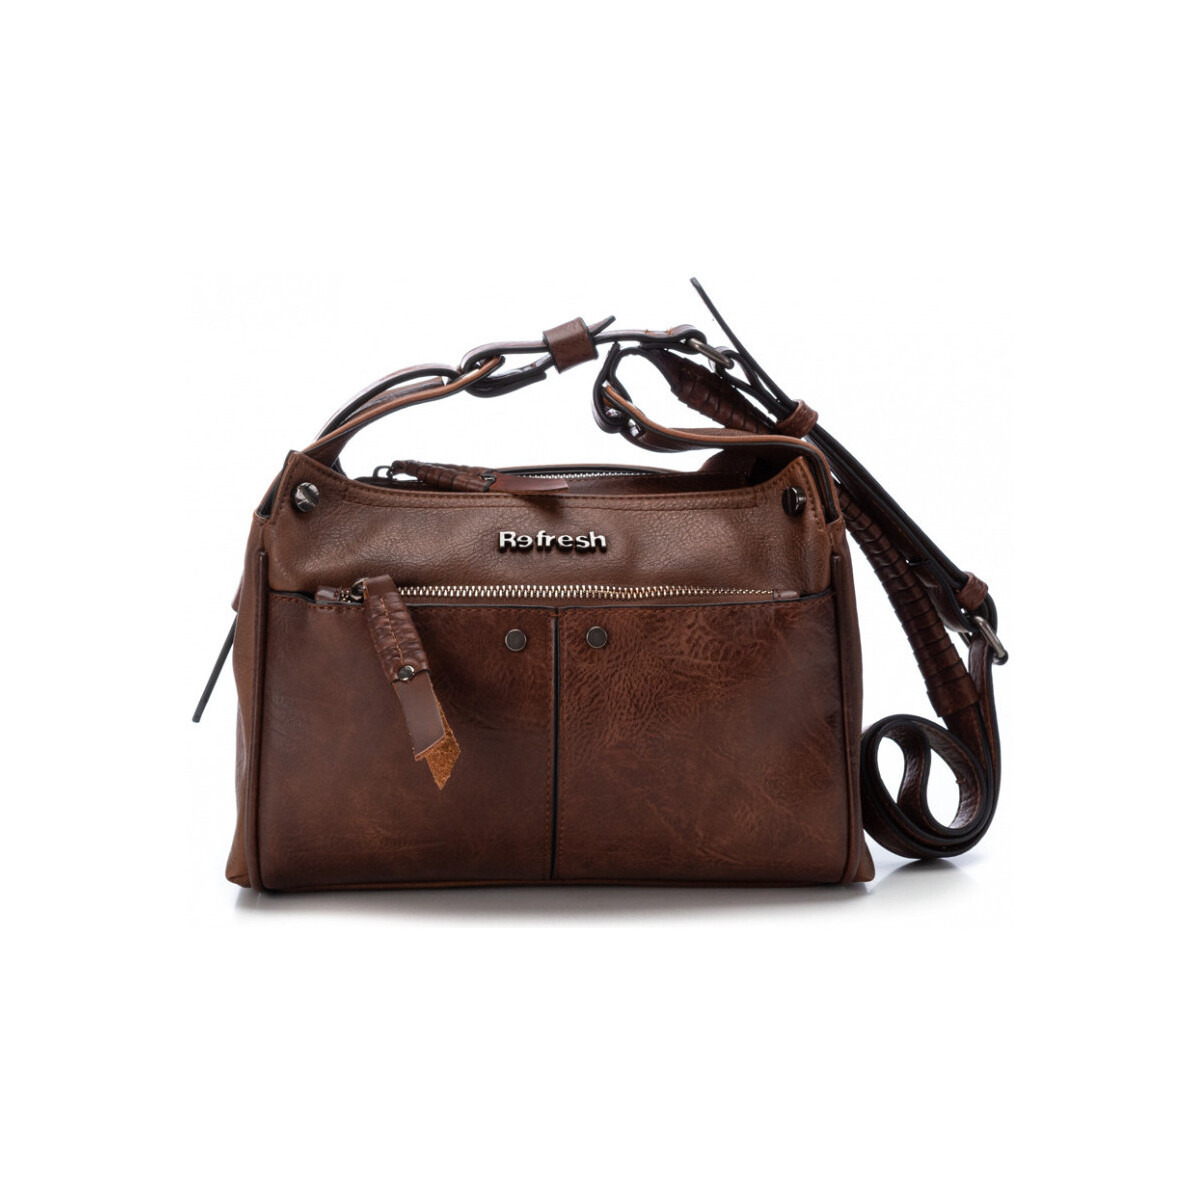 Spartoo - Ladies Brown Handbag from Refresh GOOFASH